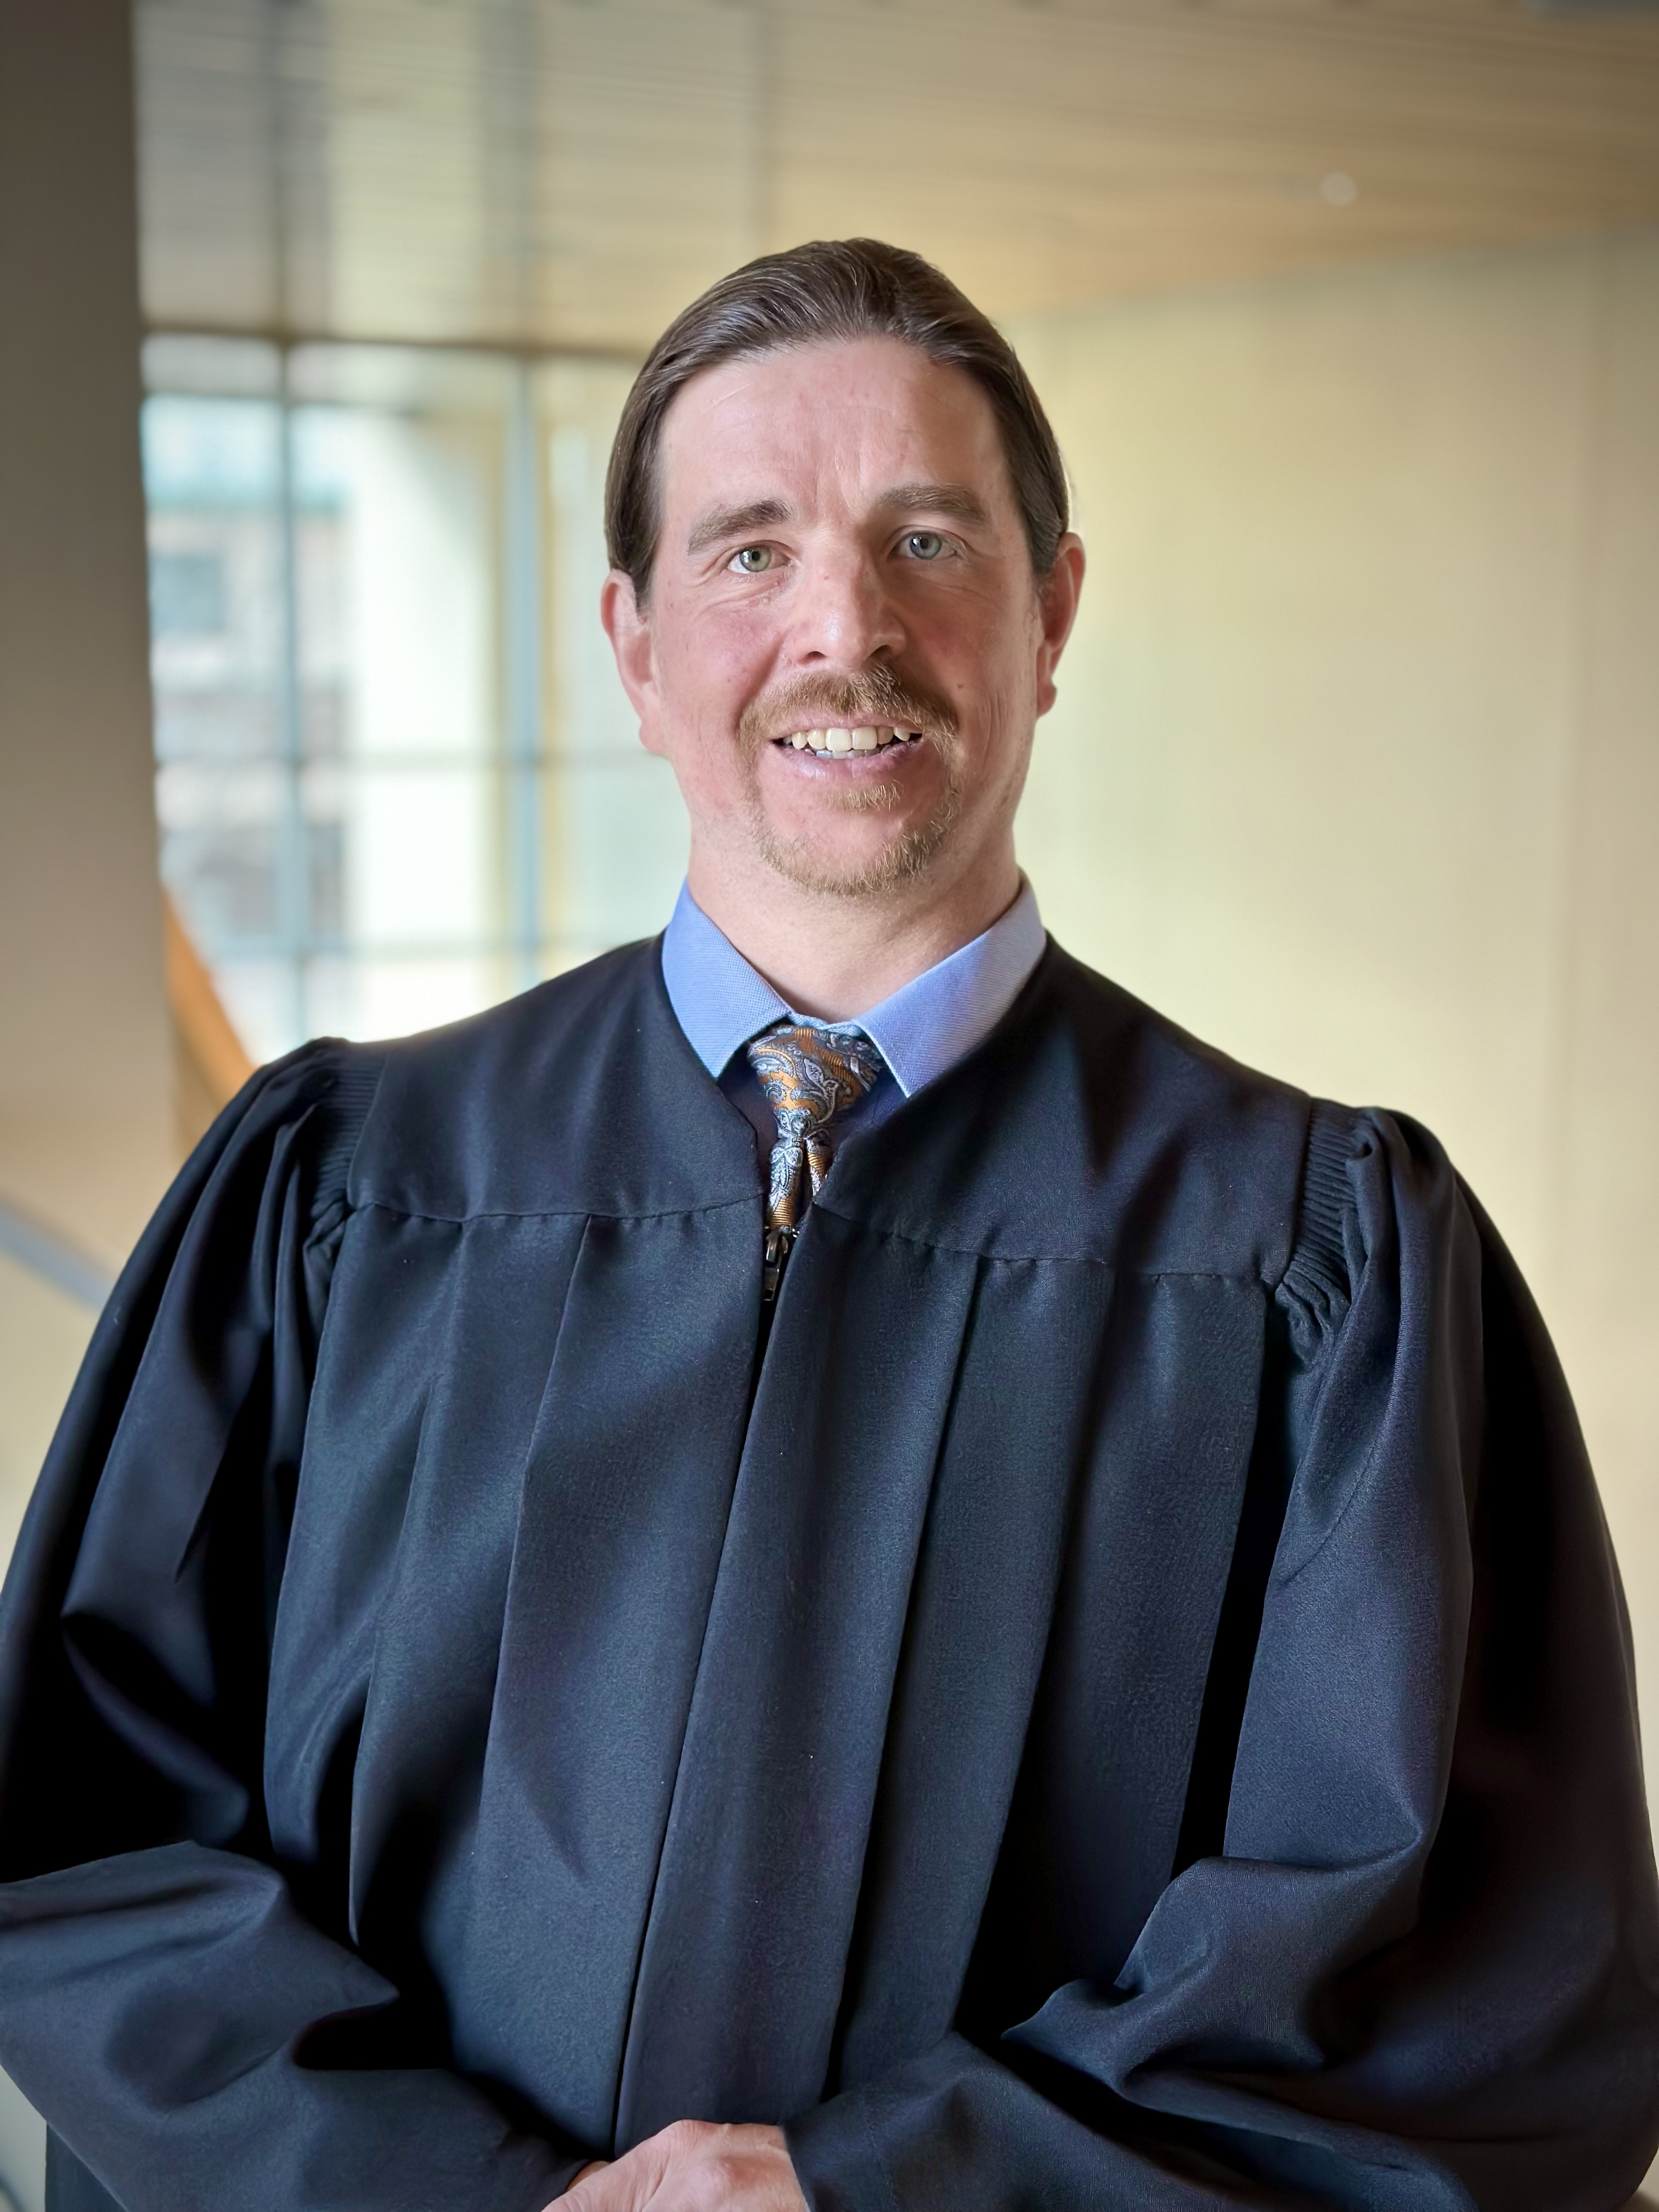 Probate Judge Perry Klare